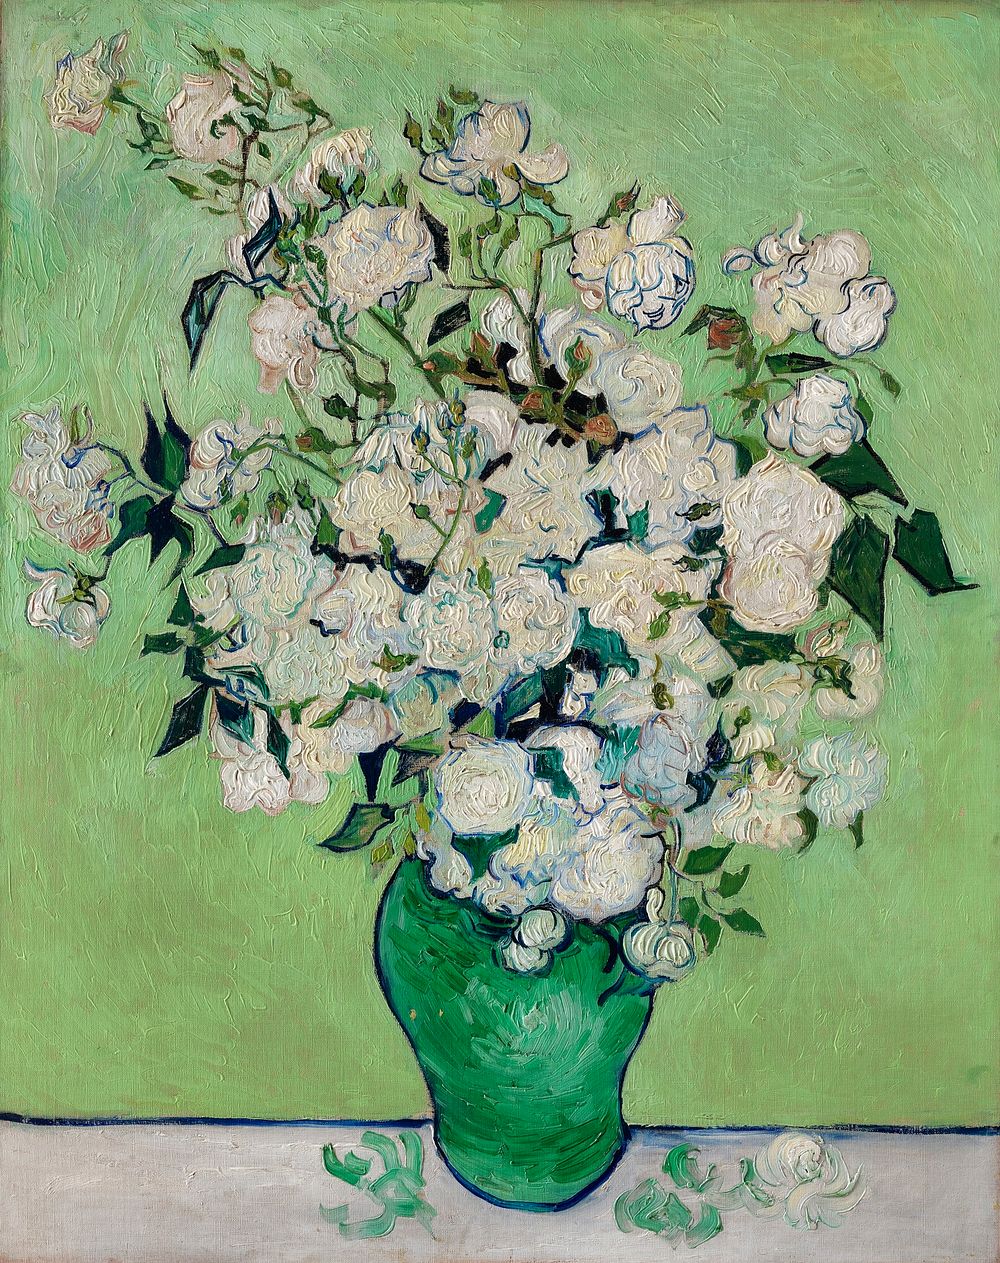 Roses (1890) by Vincent Van Gogh. Original from the MET Museum. Digitally enhanced by rawpixel.